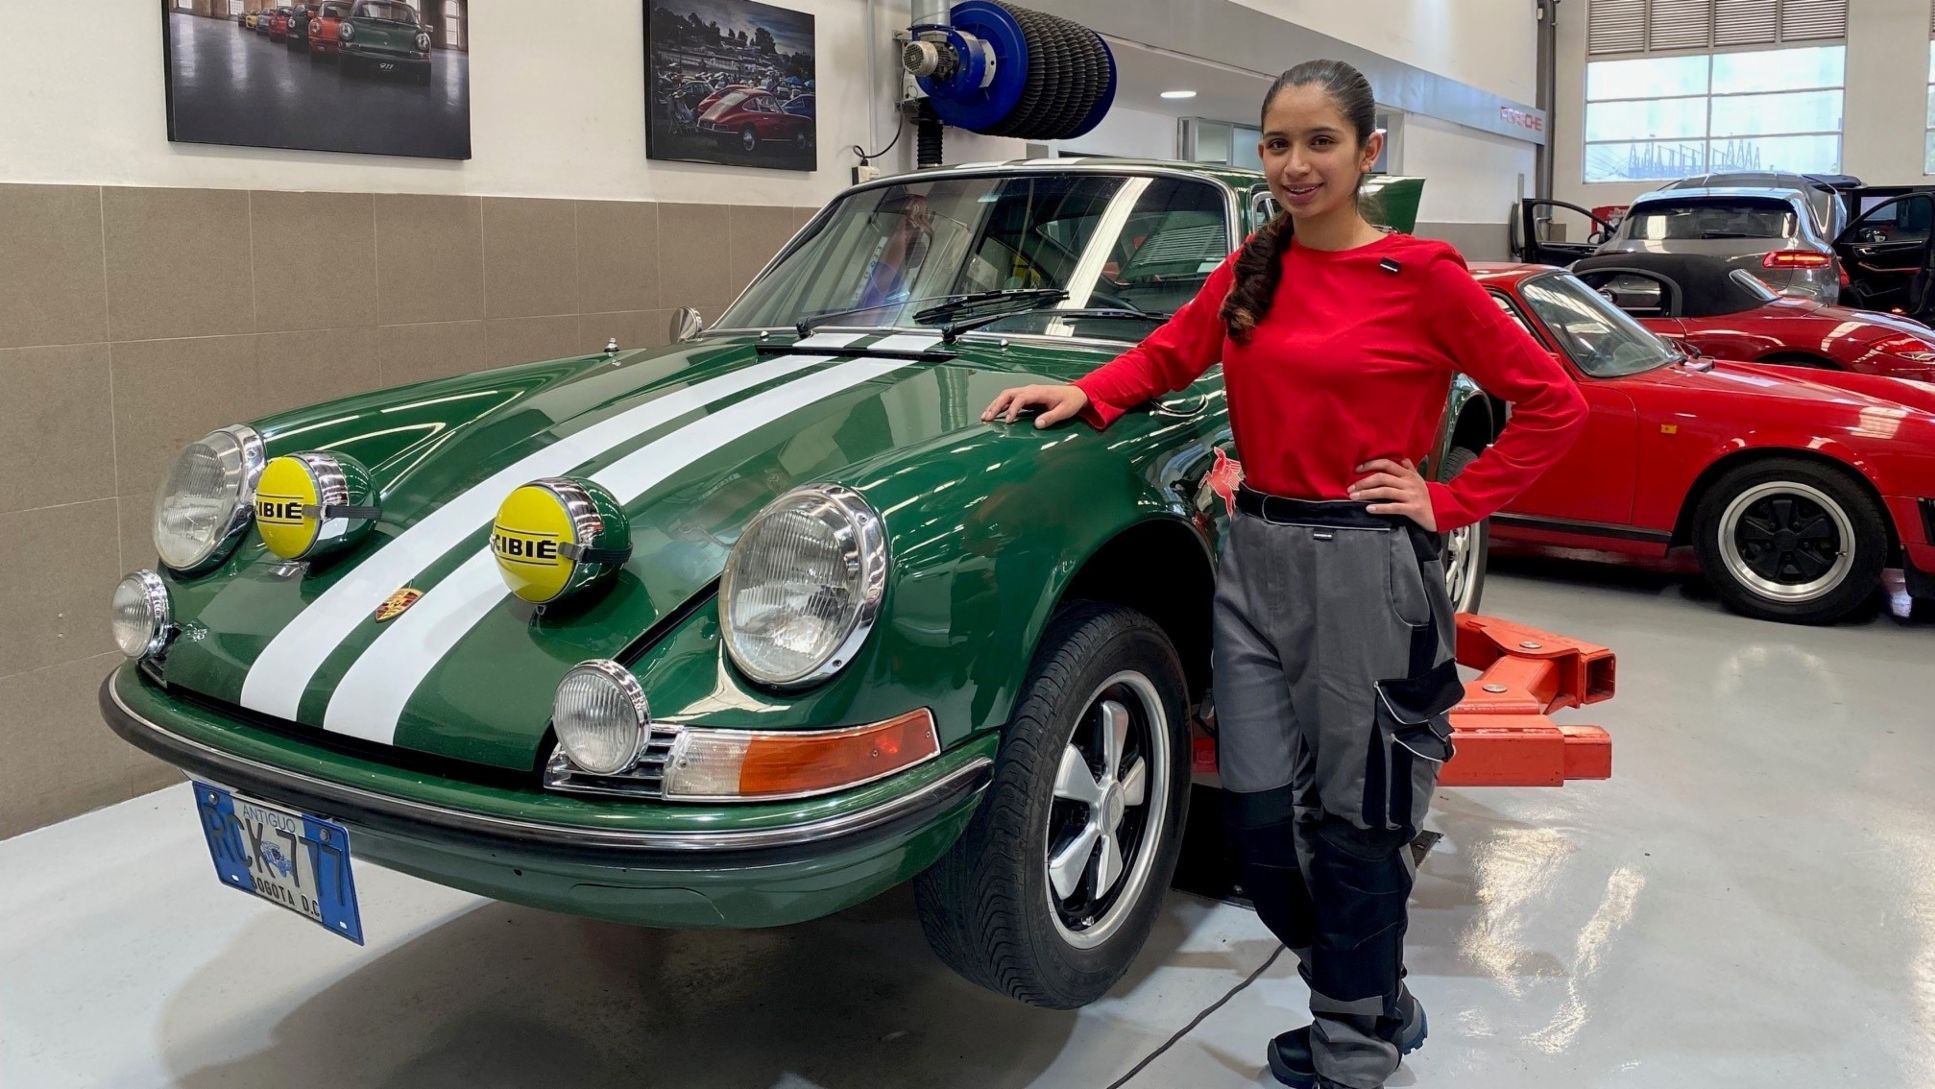 Daniela Parra, la única auxiliar técnica automotriz en los talleres Porsche de América Latina.